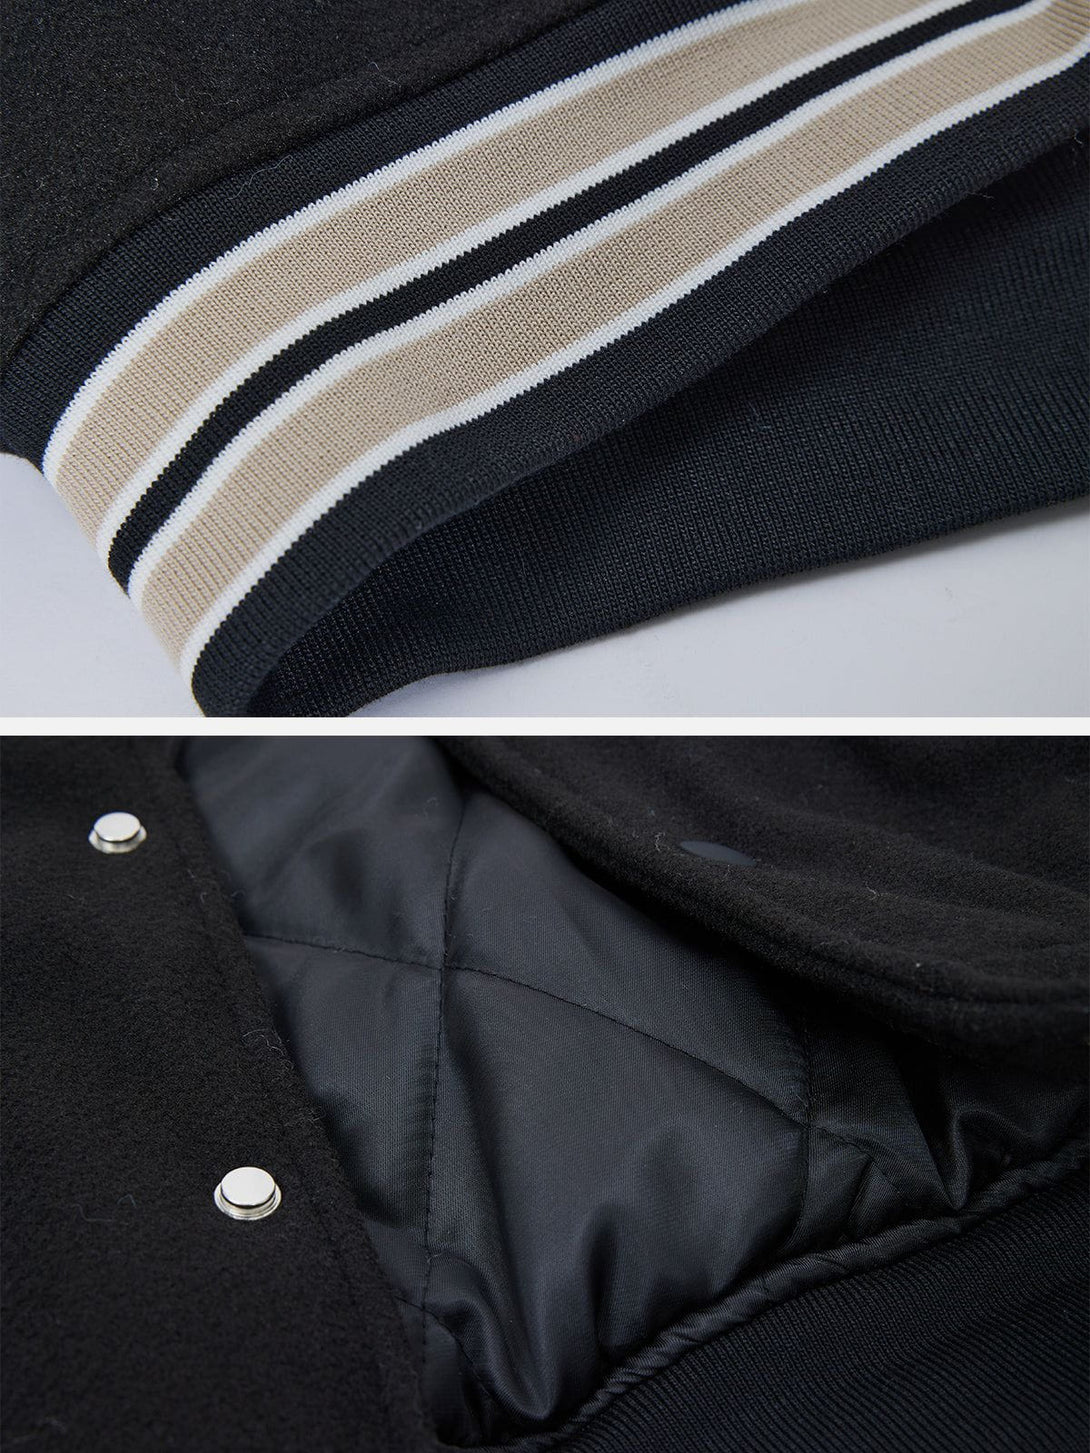 Majesda® - Contrast Stitching Varsity Jacket outfit ideas streetwear fashion